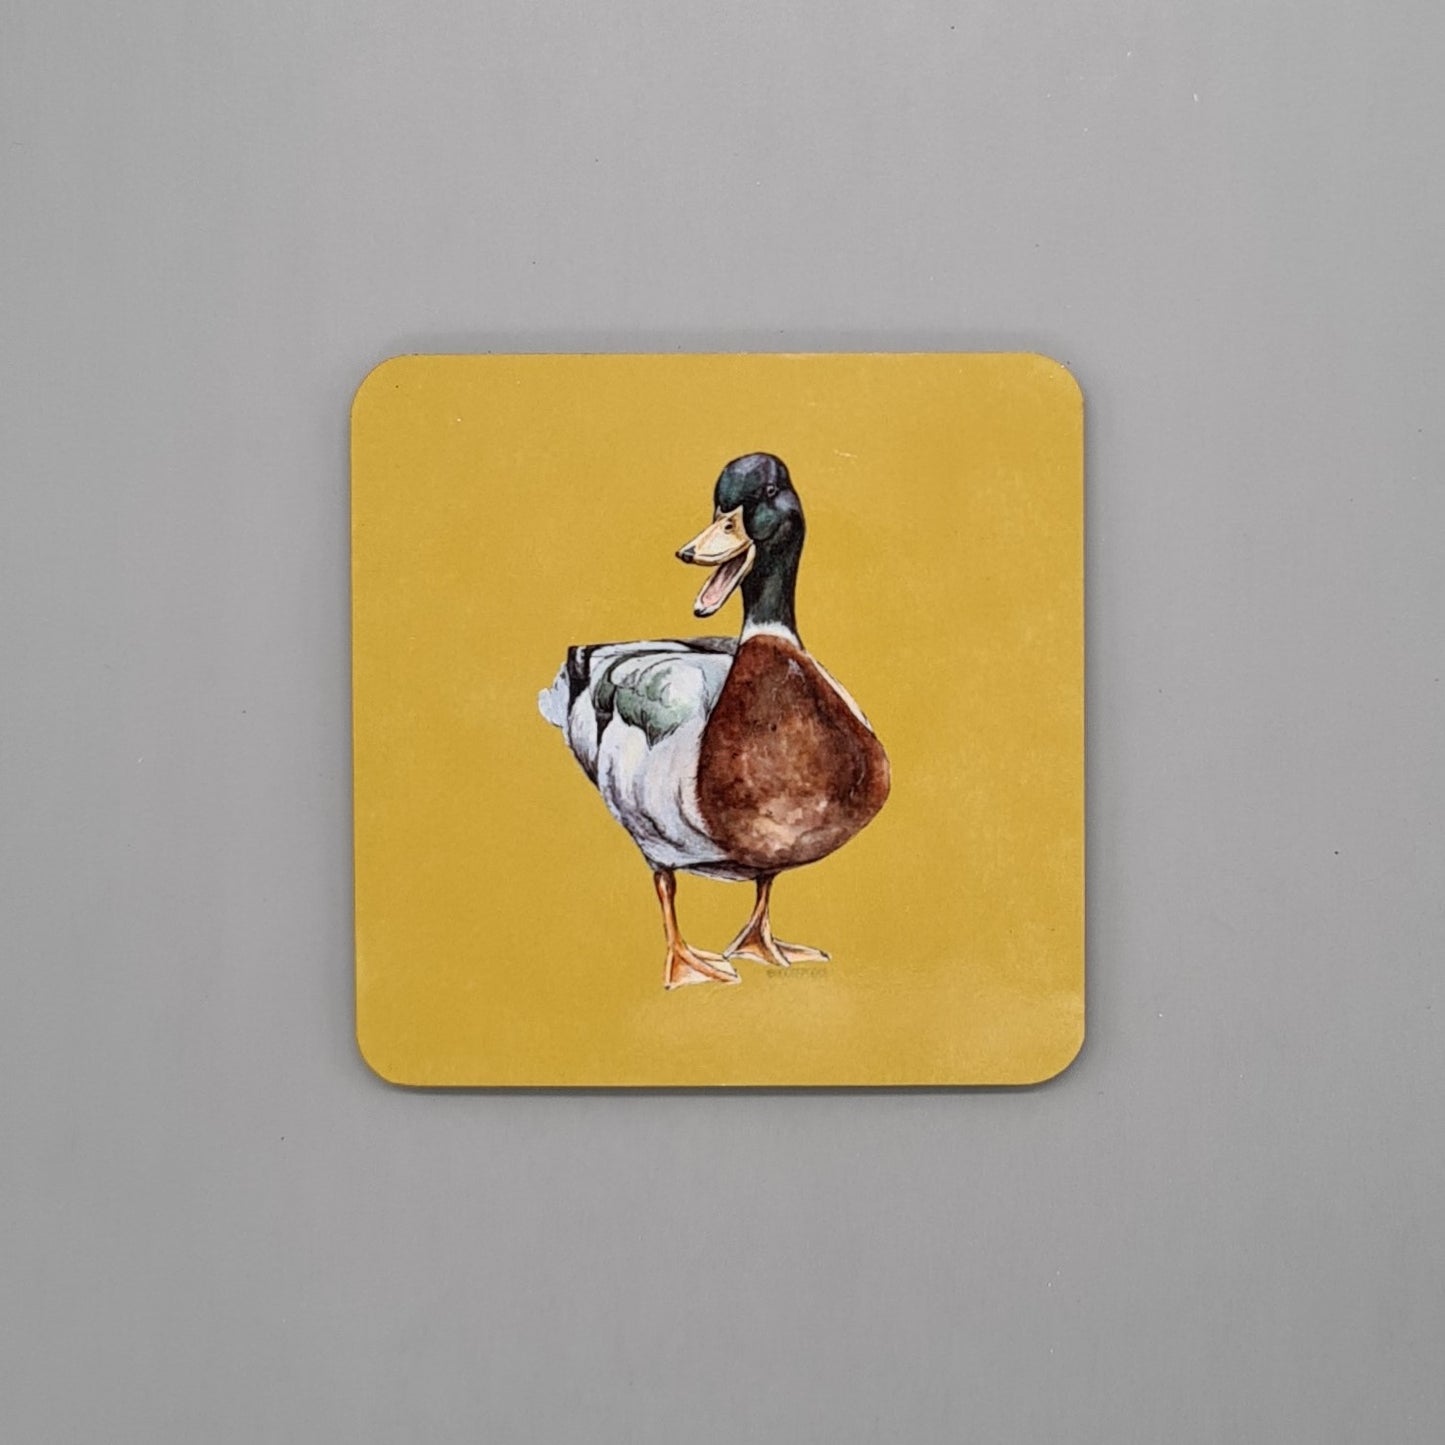 Beautiful Mallard Duck Art Hardwood Coaster featuring 'The Duke' Print